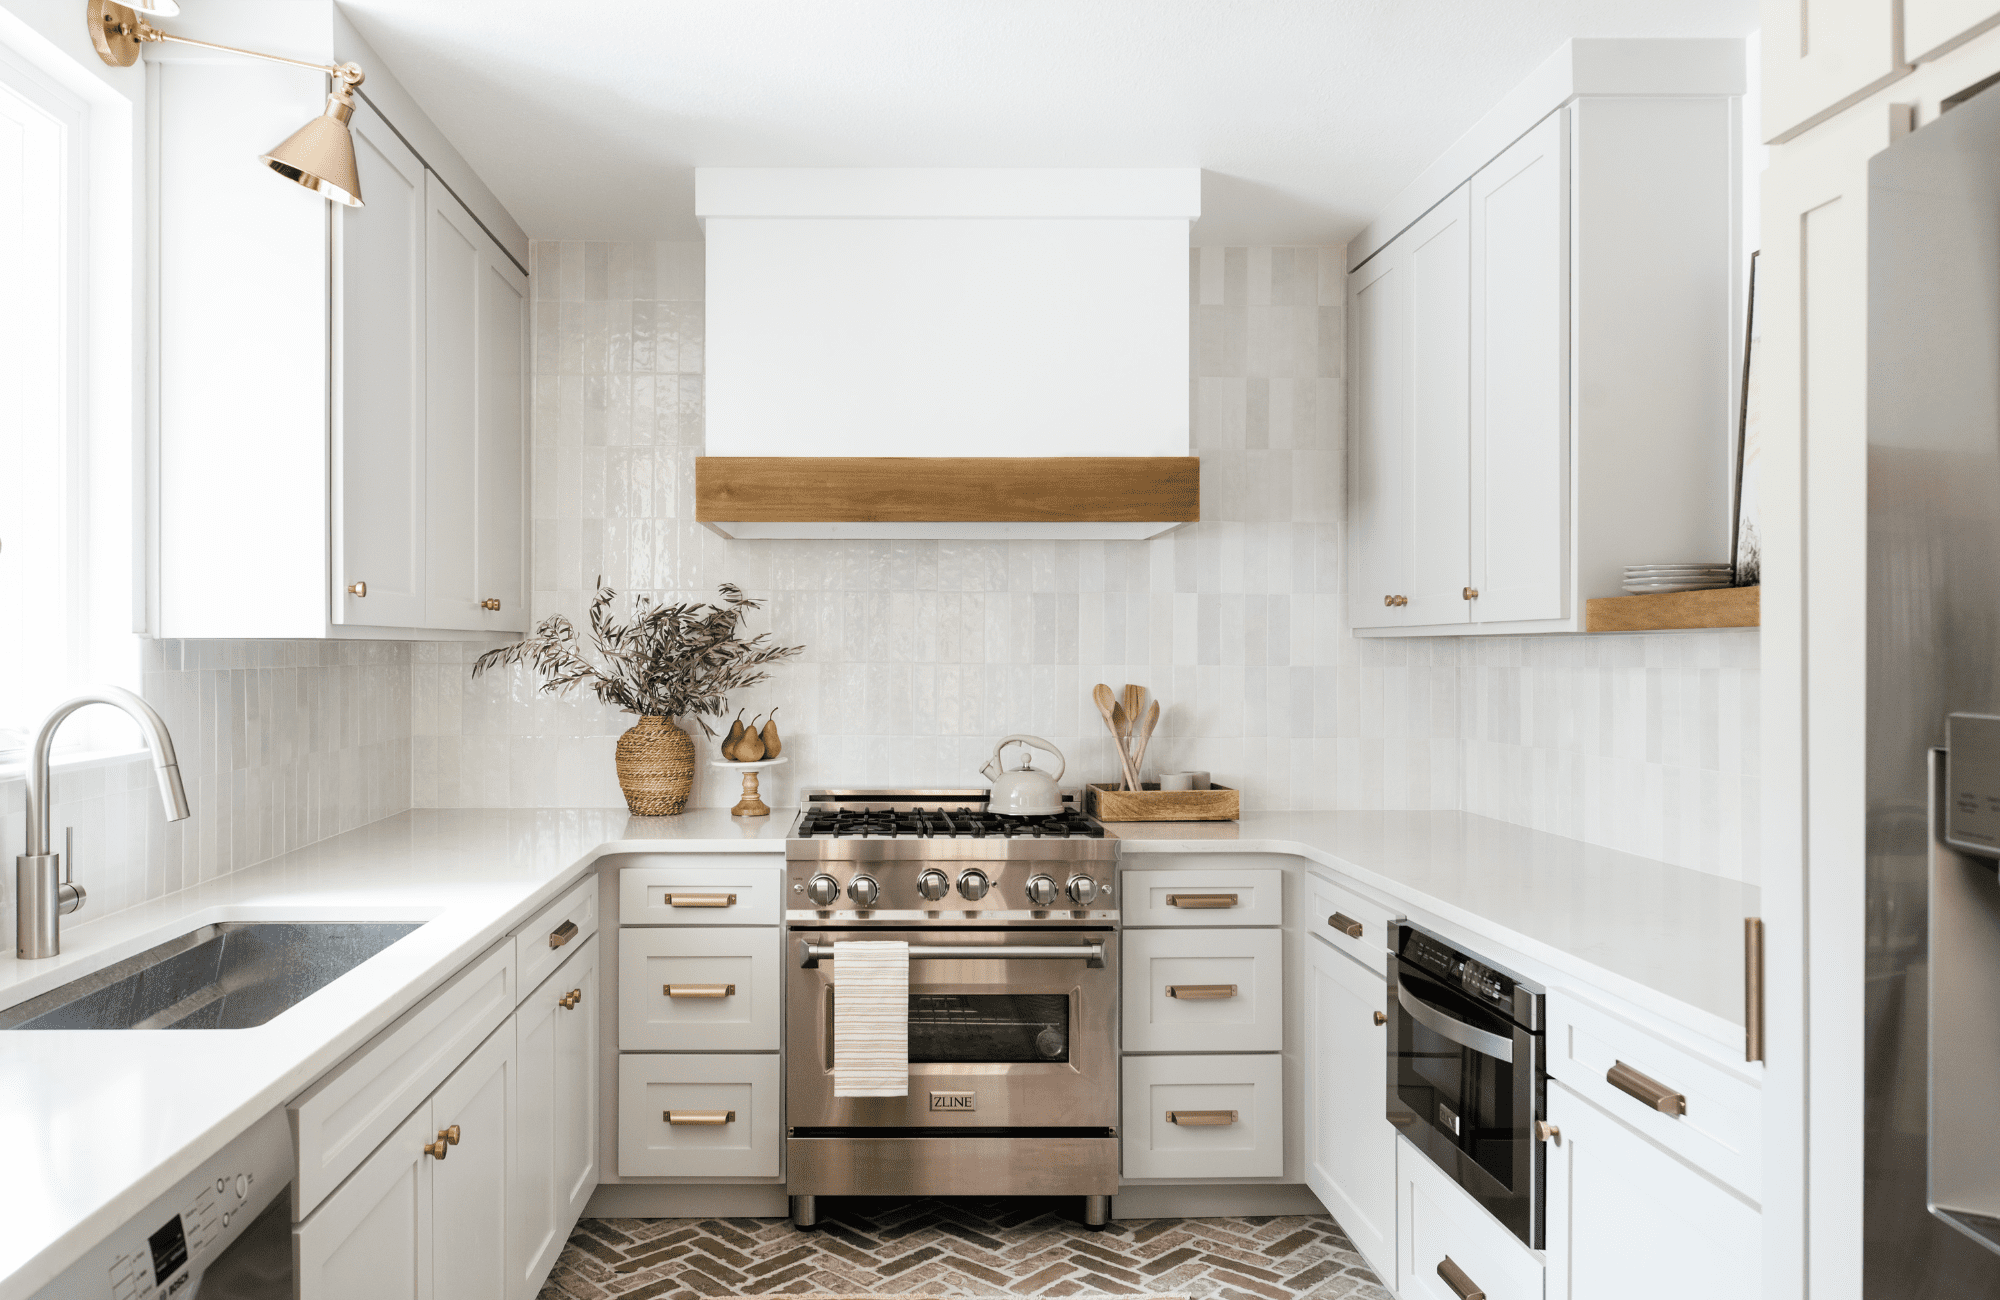 styleberry-creative-interiors-san-antonio-tx-renovate-or-furnish-your-home-small-kitchen-renovation-modern-appliances-brick-flooring-white-cabinets-modern-design